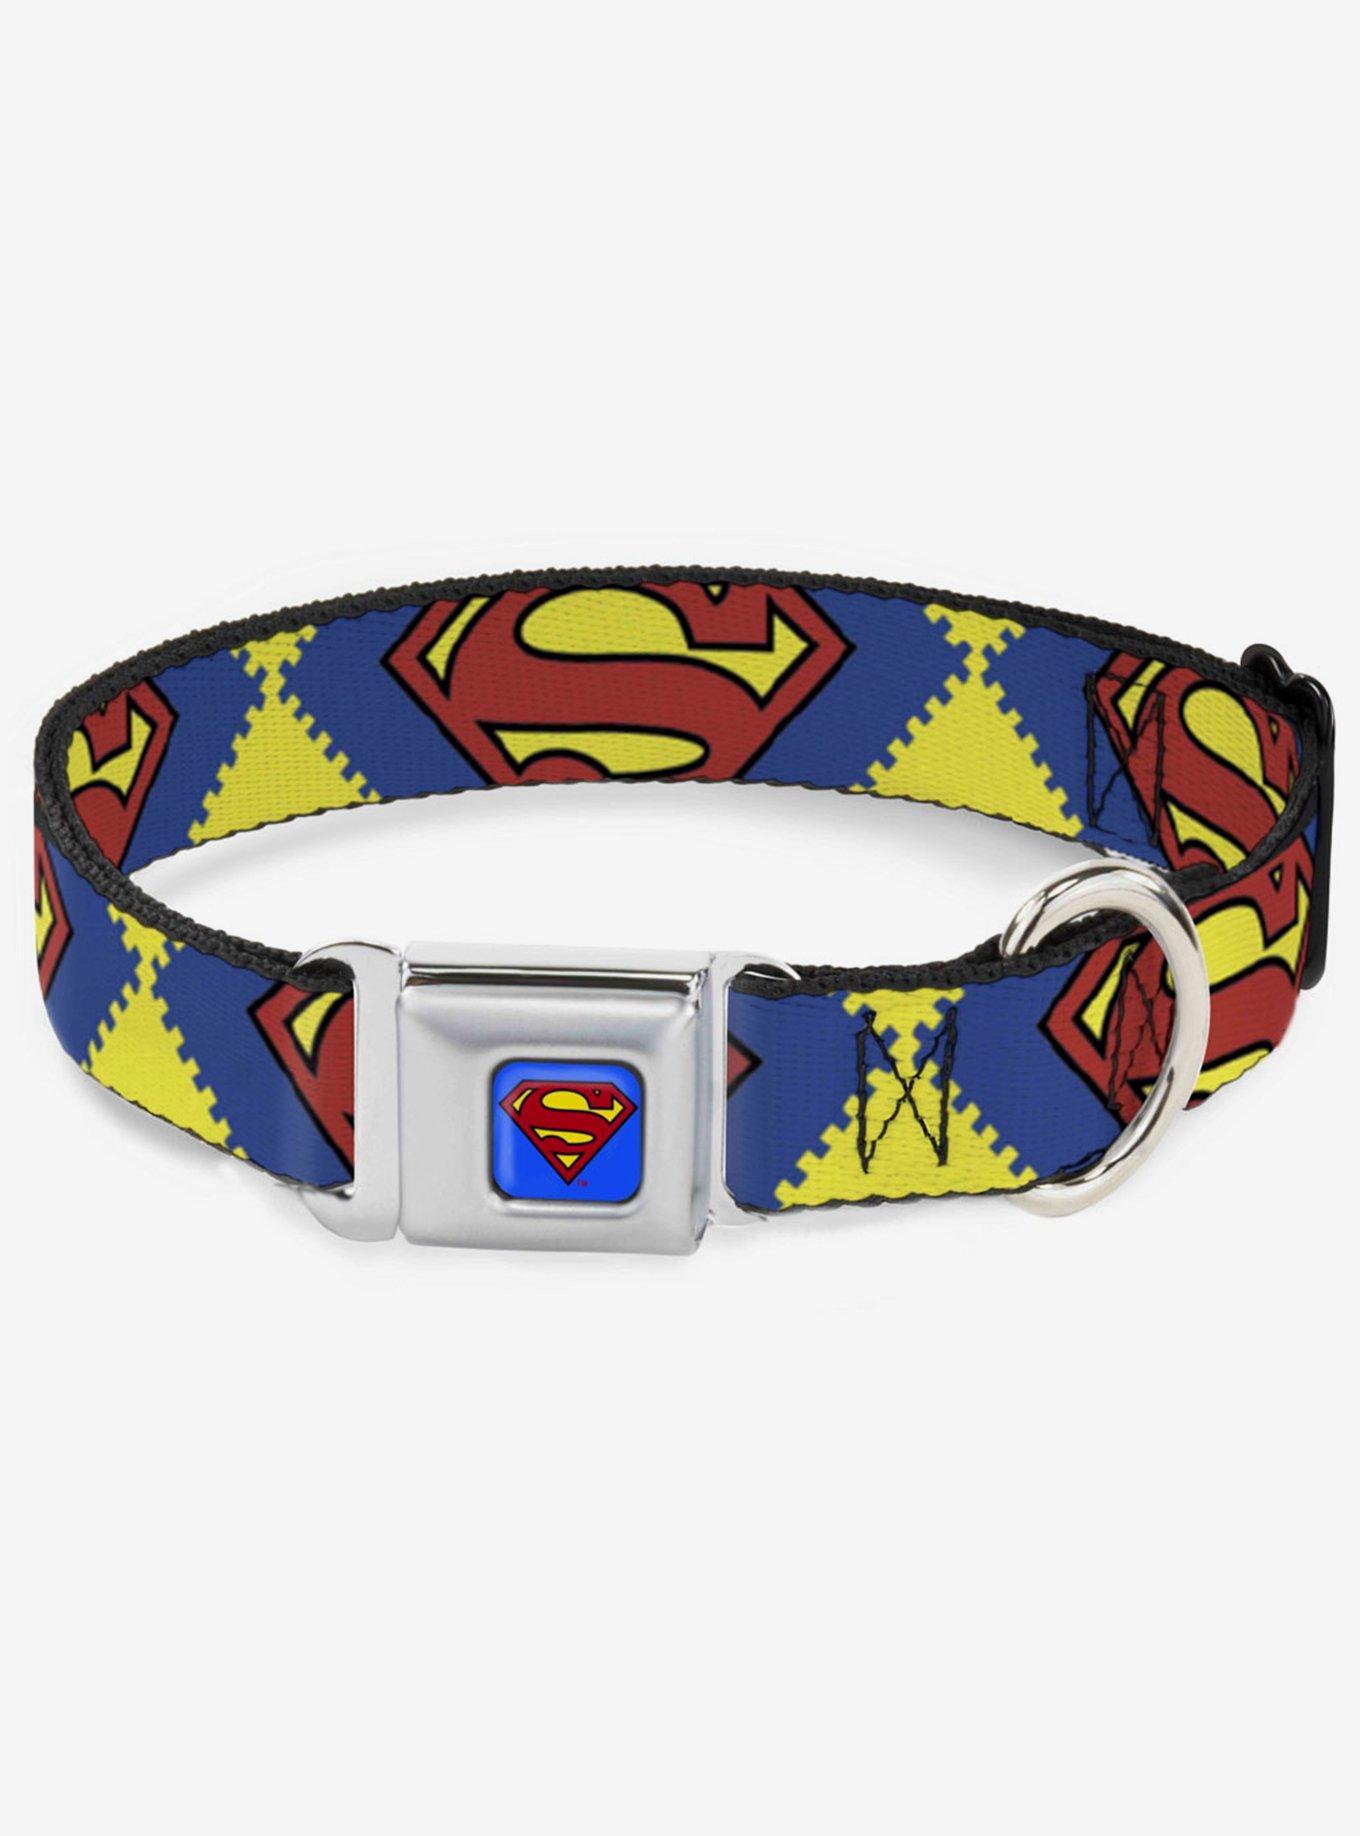 DC Comics Justice League Jagged Superman Shield Close Up Seatbelt Buckle Dog Collar, MULTICOLOR, hi-res